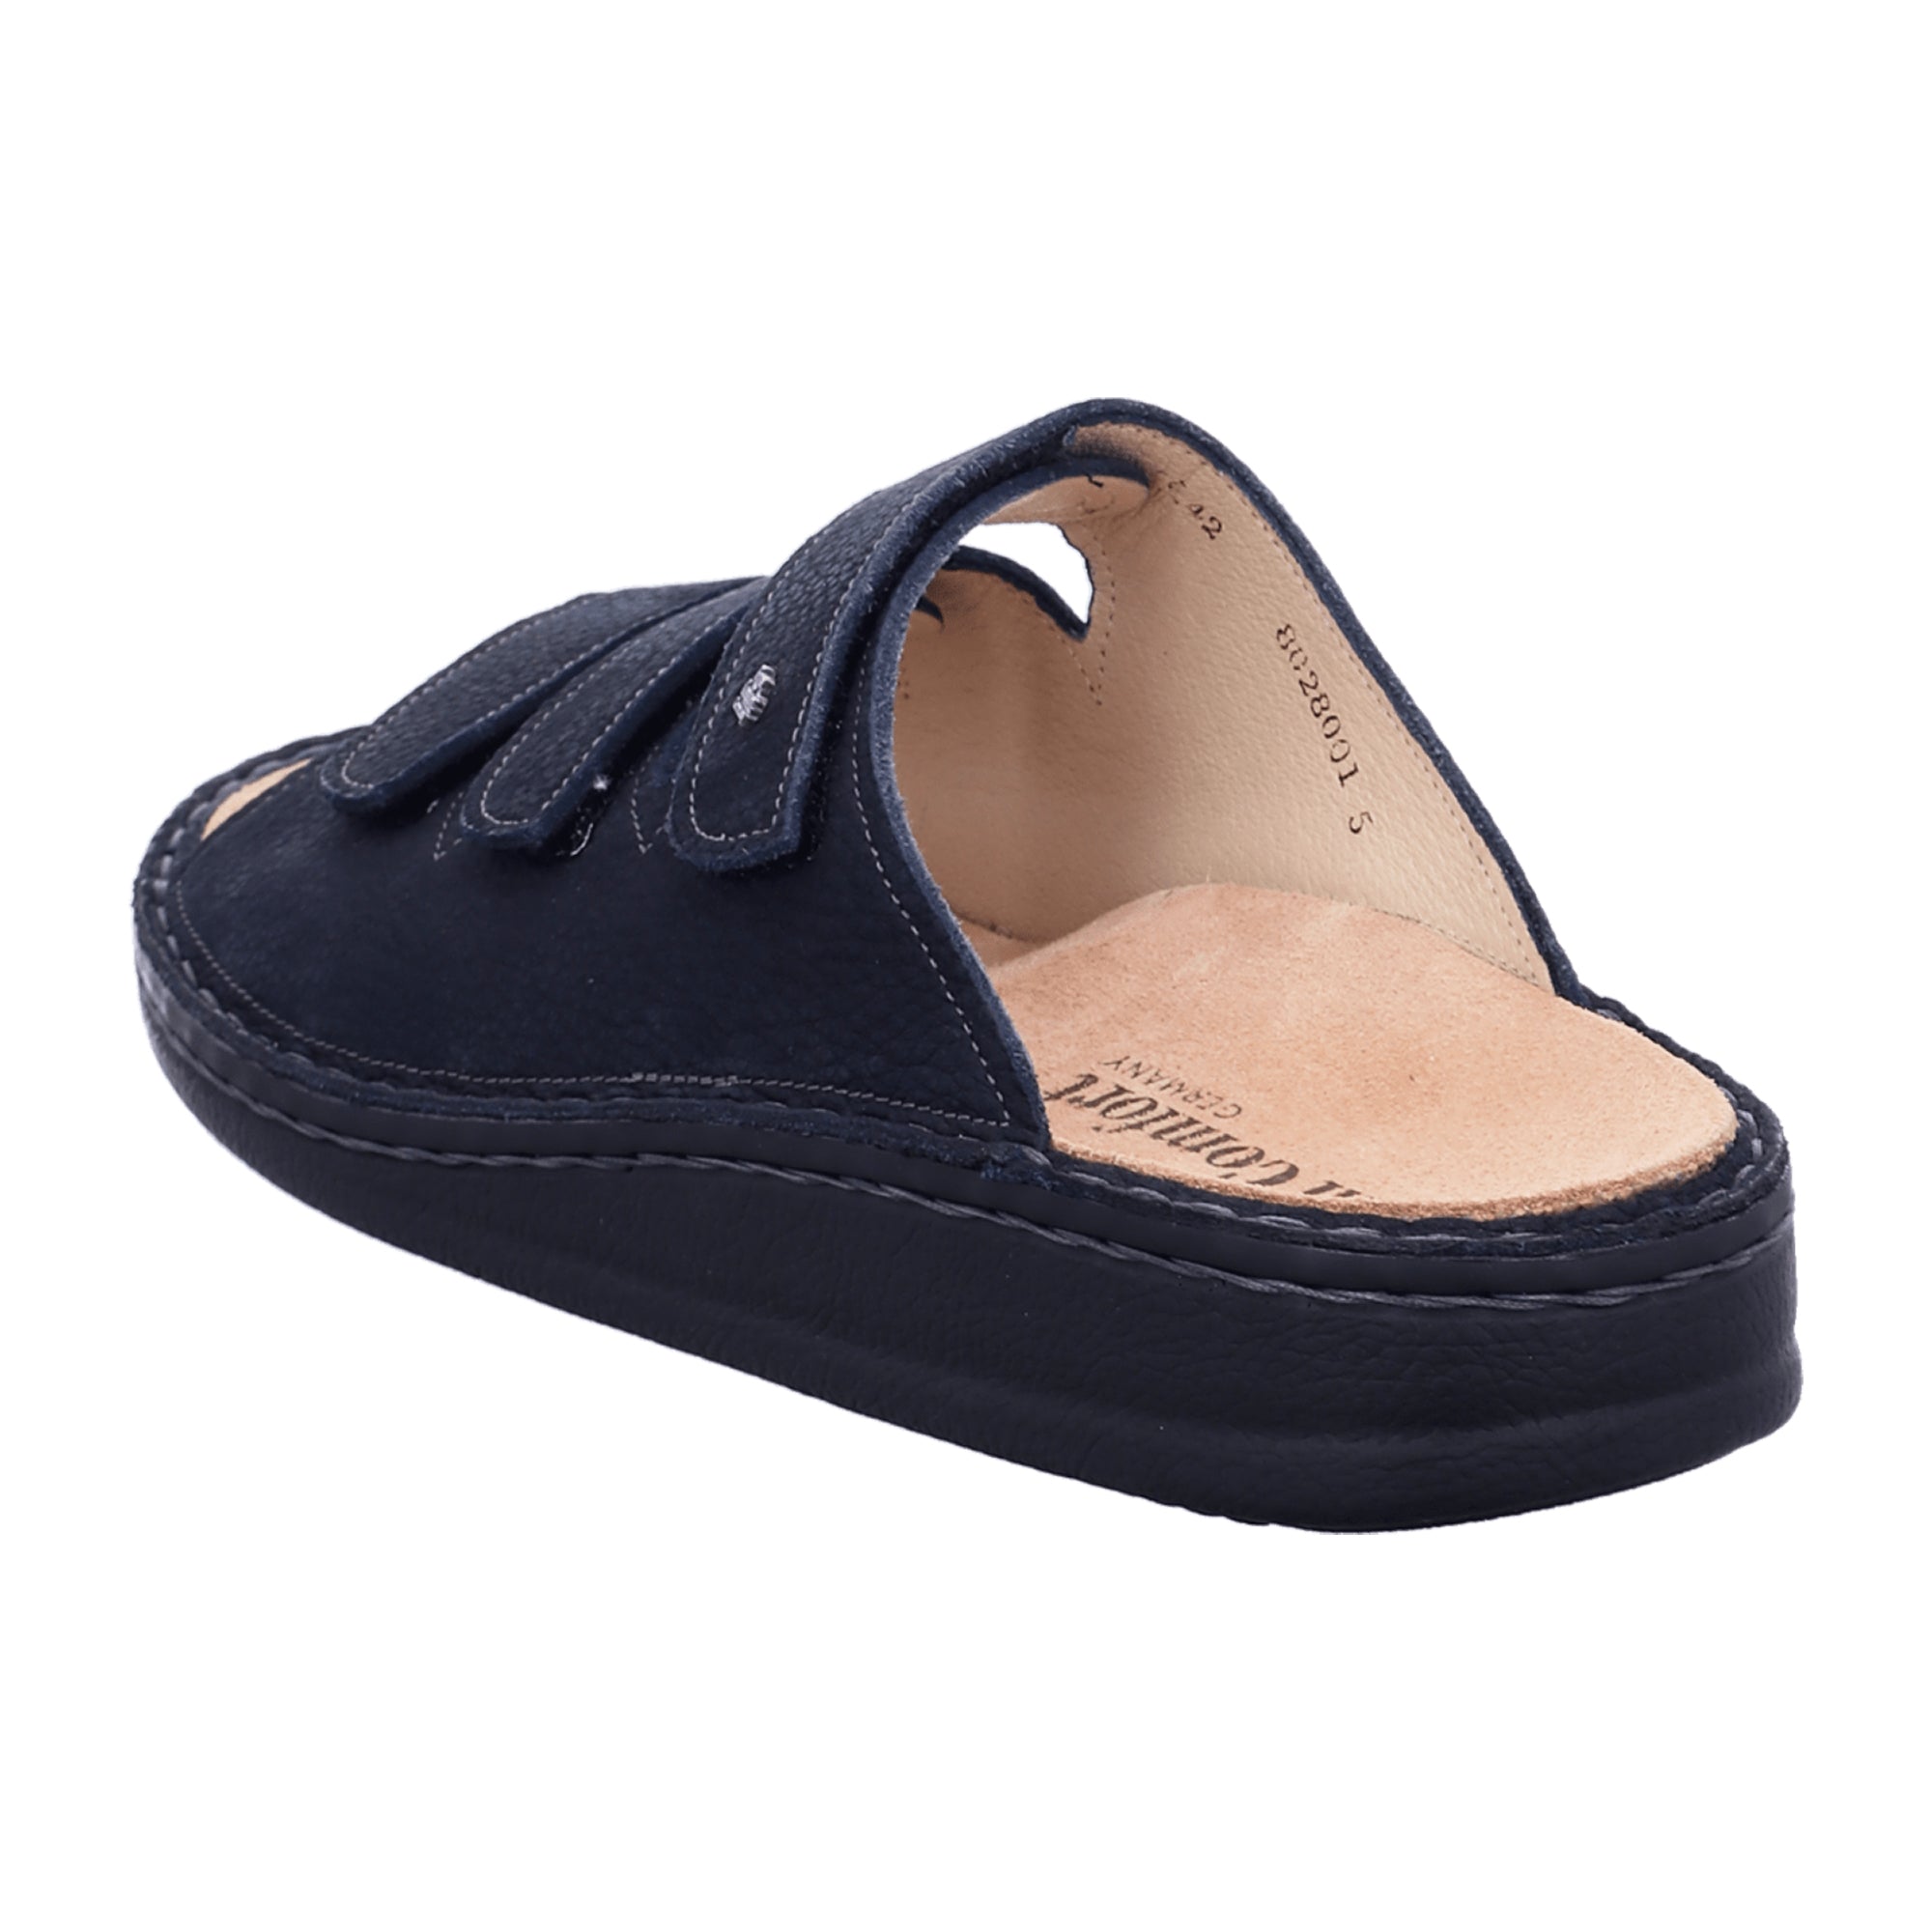 Finn Comfort Korfu Men's Slide Sandals, Night Blue - Stylish & Comfortable Leather Sandals for Men